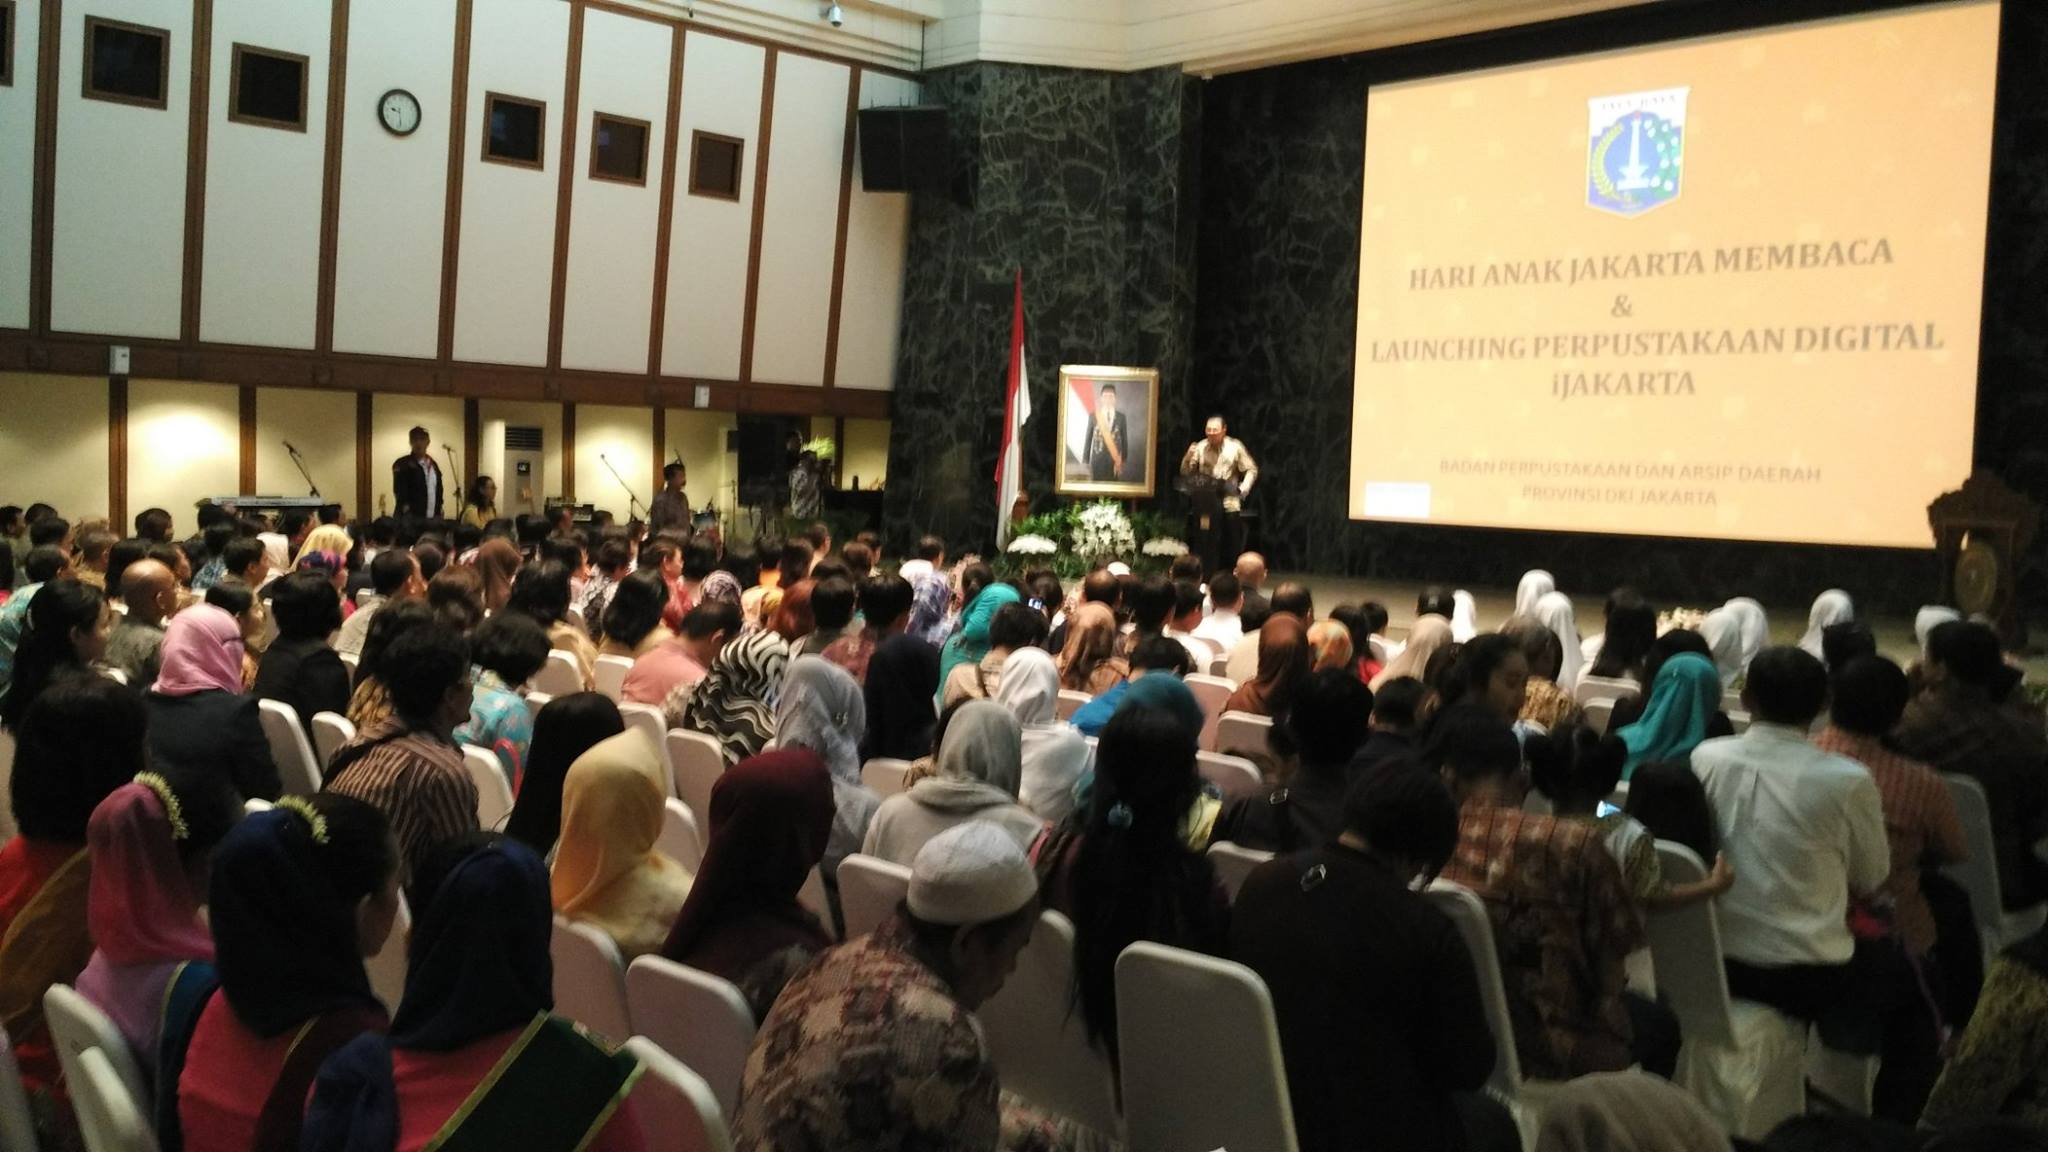 Gubernur DKI Jakarta, Basuki Tjahja Purnama (Ahok) pada acara peluncuran Perpustakaan Digital atau IJakarta (foto ; Nur Terbit)